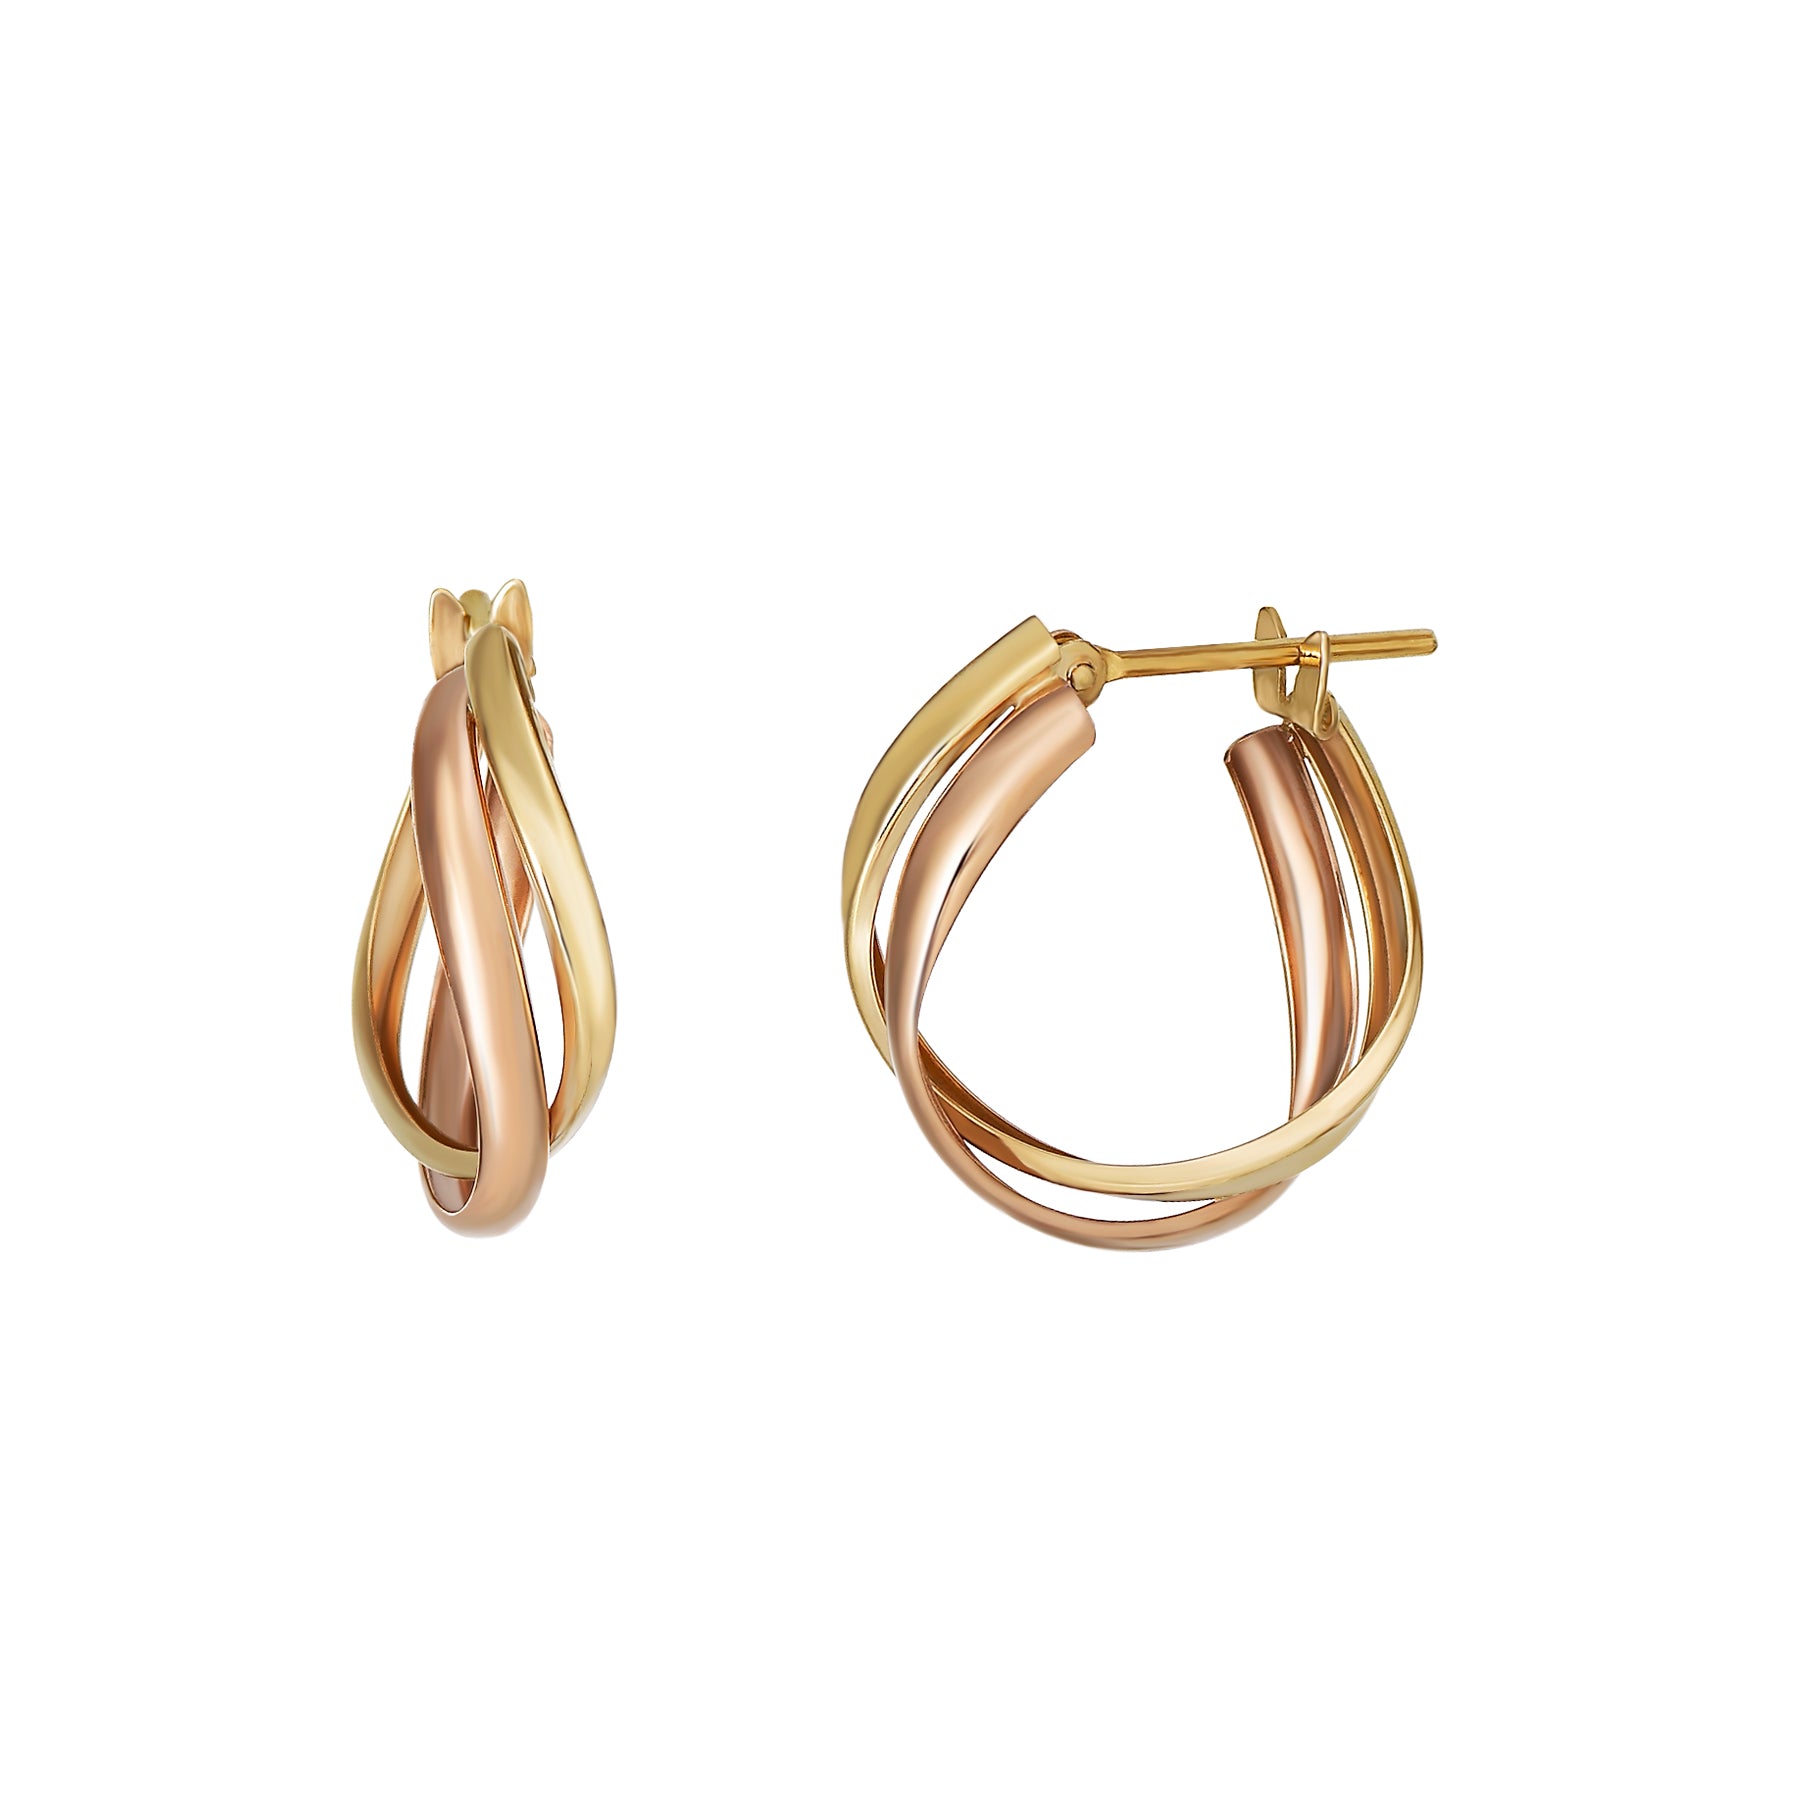 18K / 10K Gold Twisted Twin Hoop Earrings - Product Image